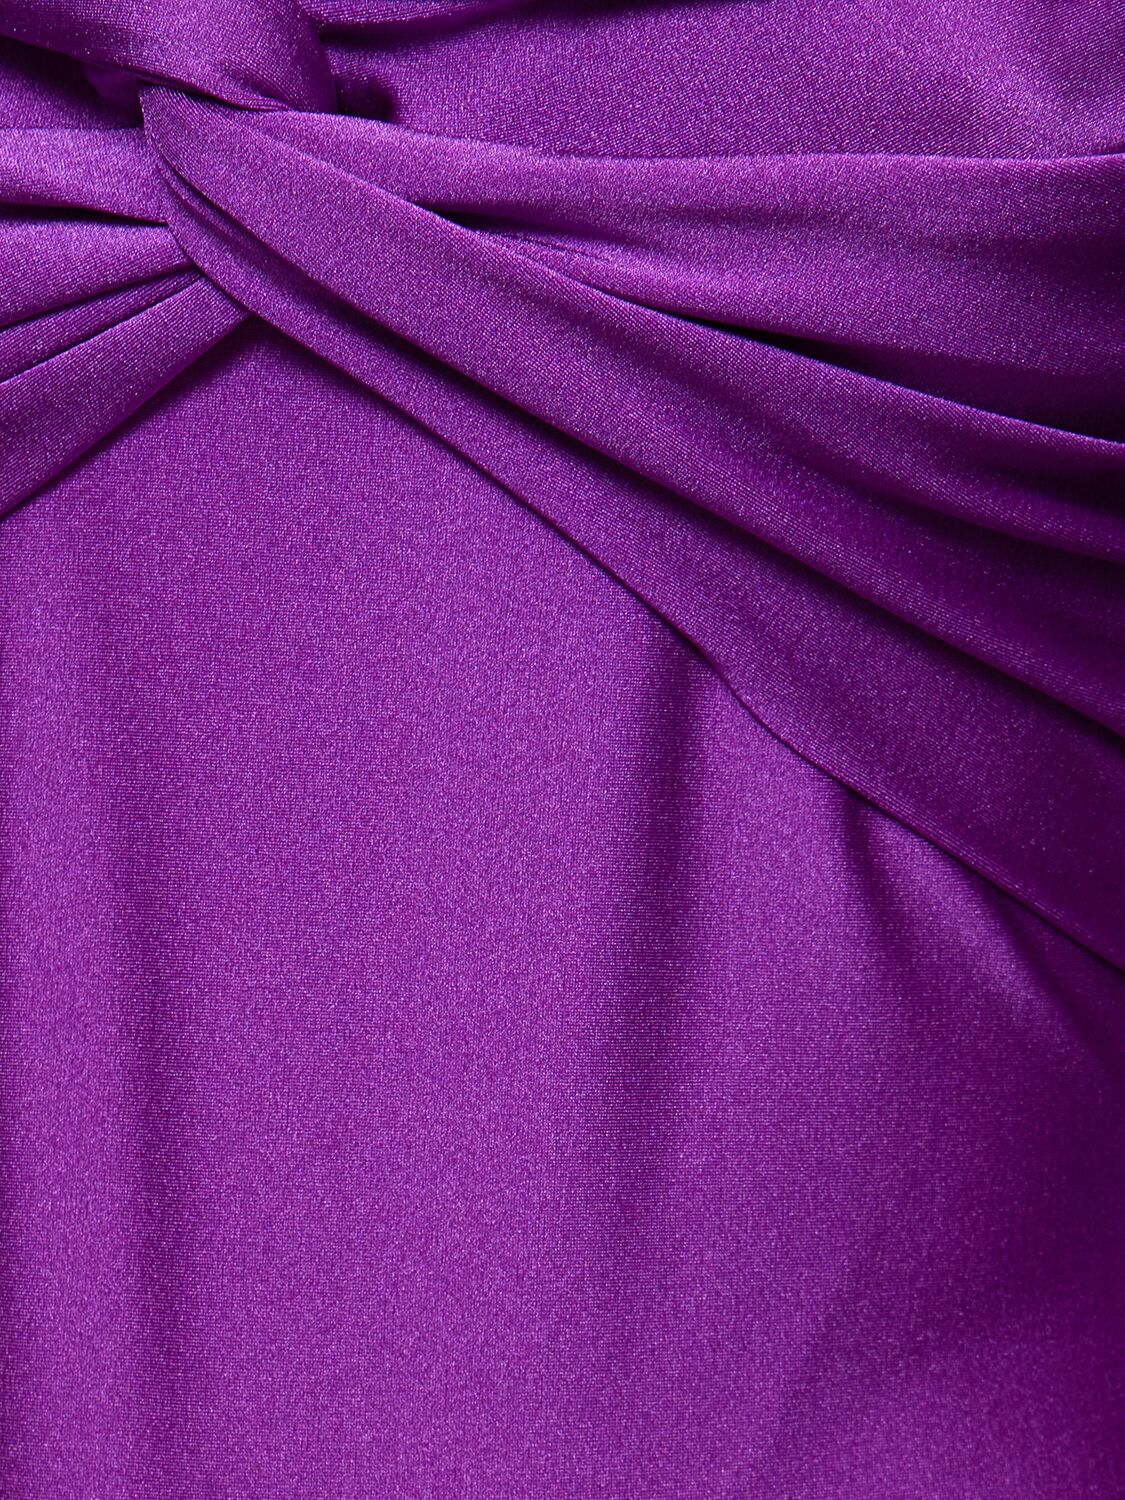 Shop The Andamane Kendall Off The Shoulder Lycra Bodysuit In Purple